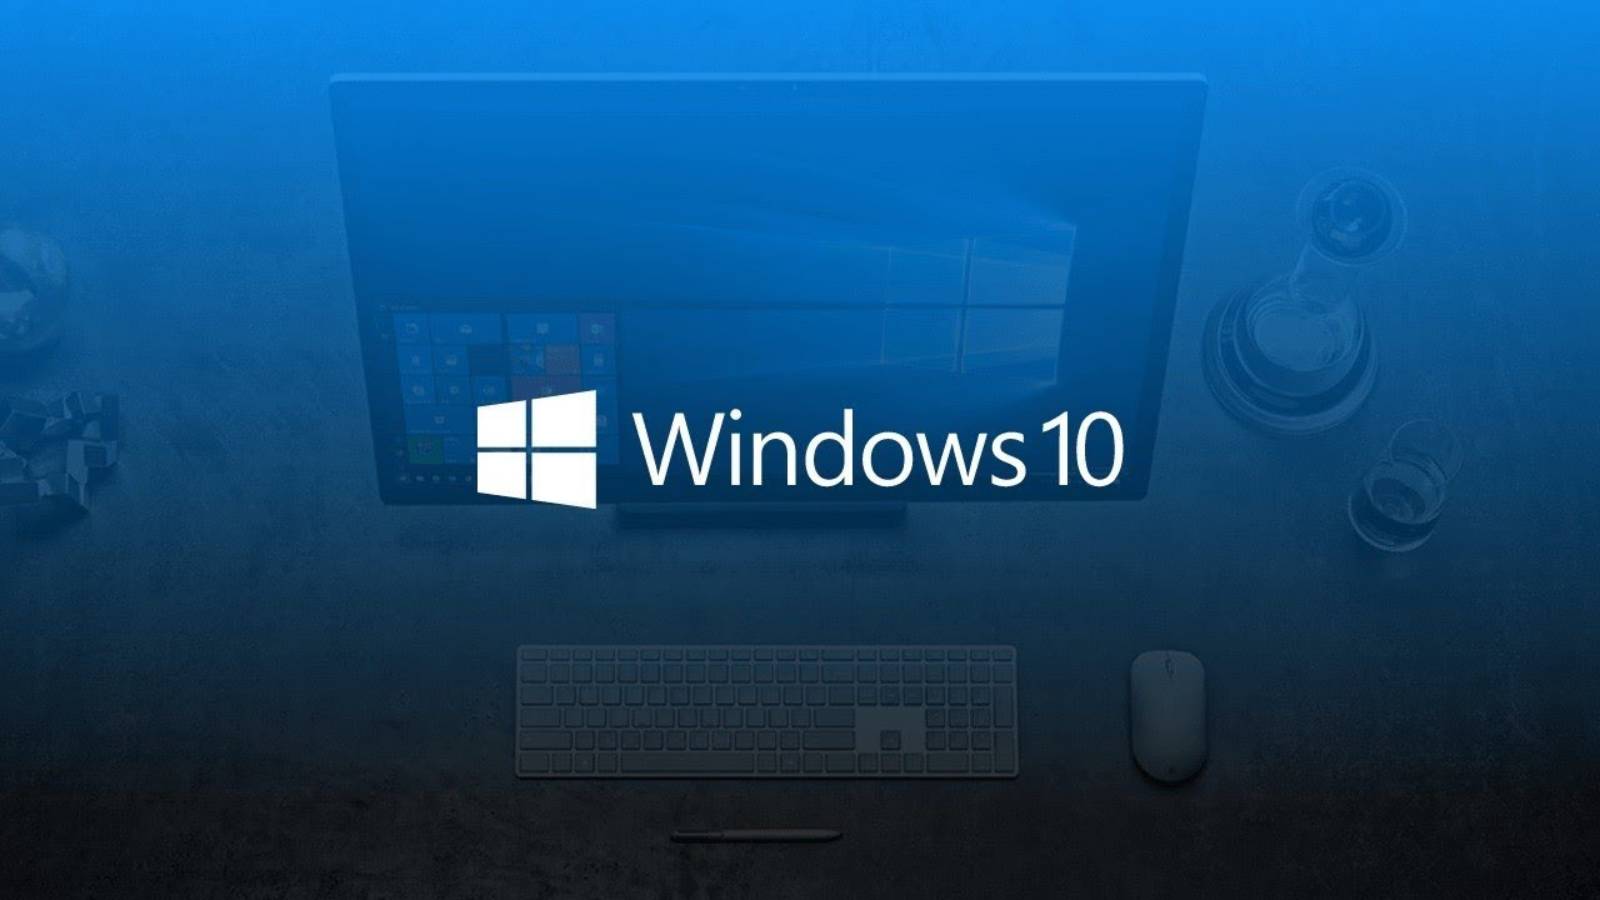 Windows 10 Decision Microsoft Company